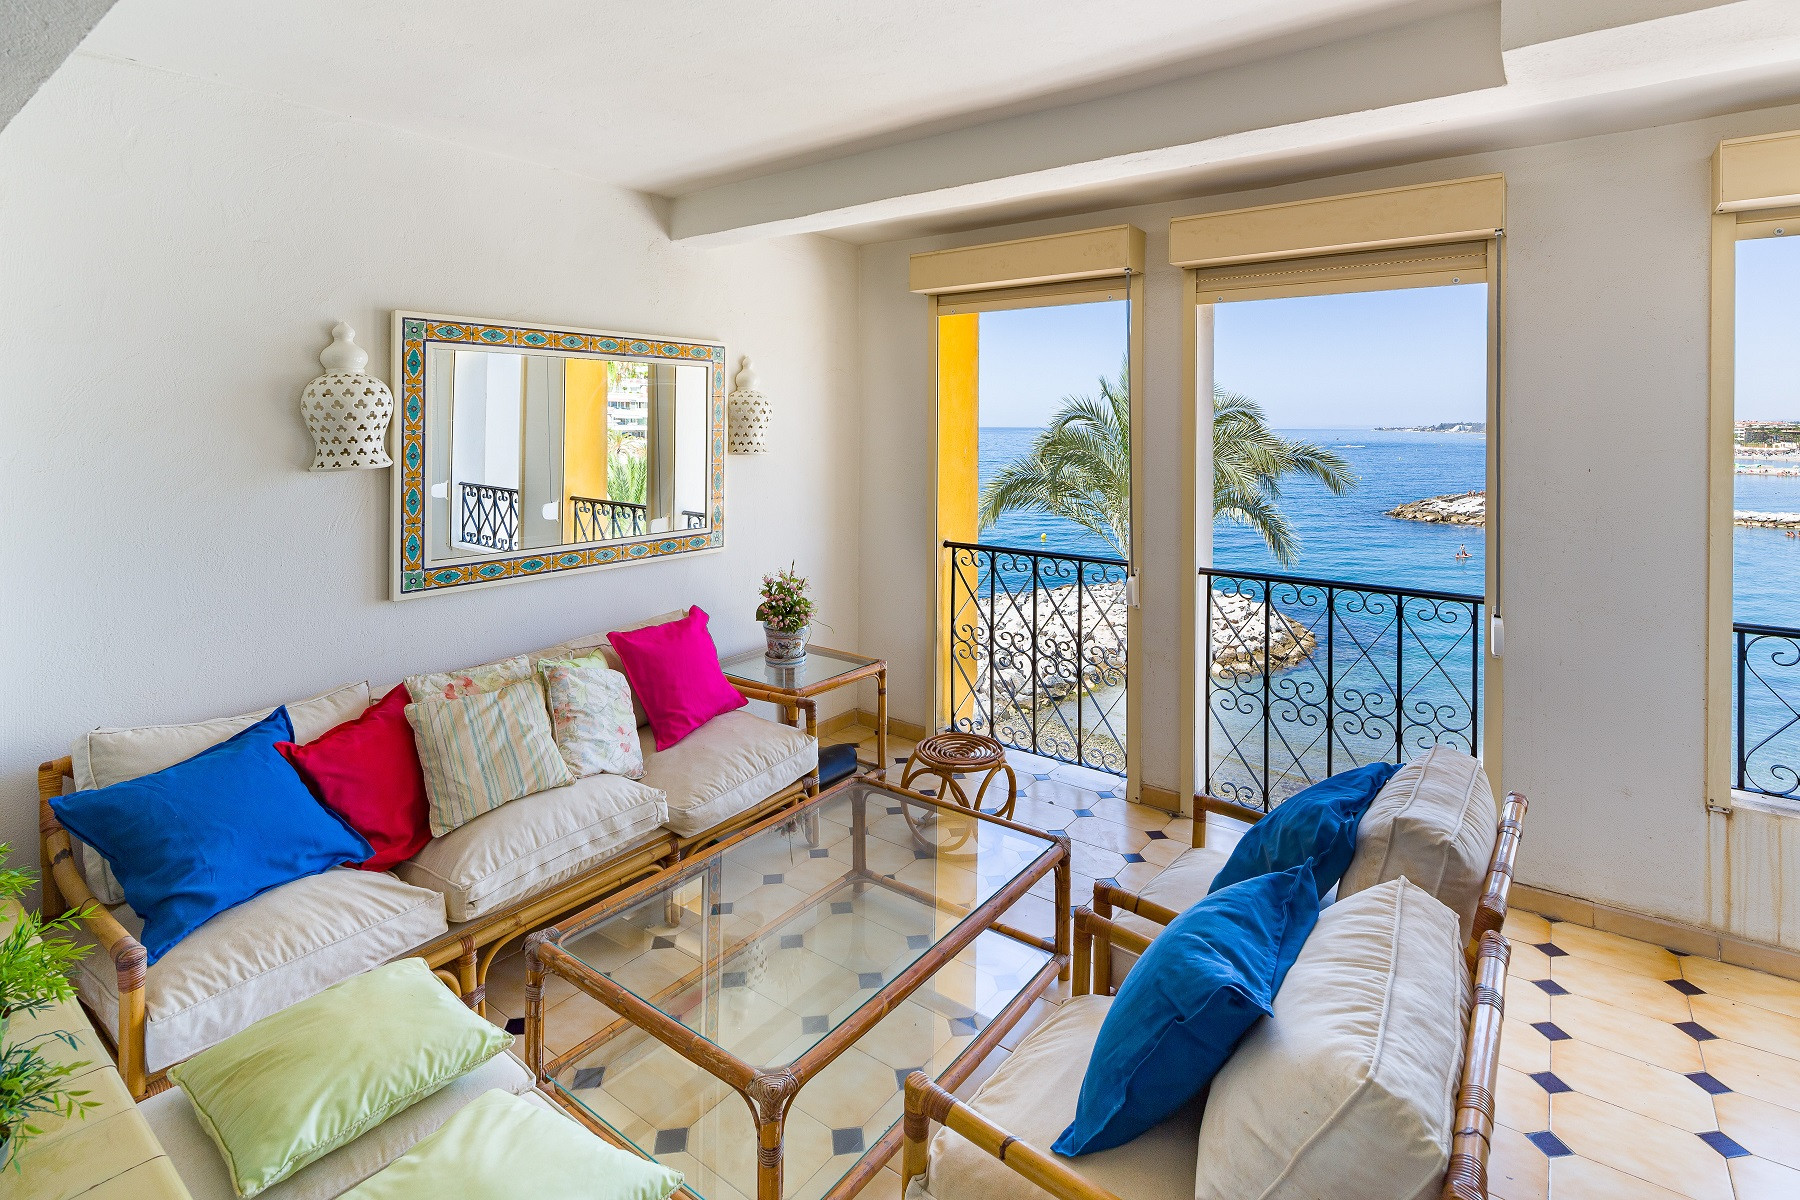 Frontline beach Apartment with panoramic sea views in Puerto, Puerto Banus, Marbella